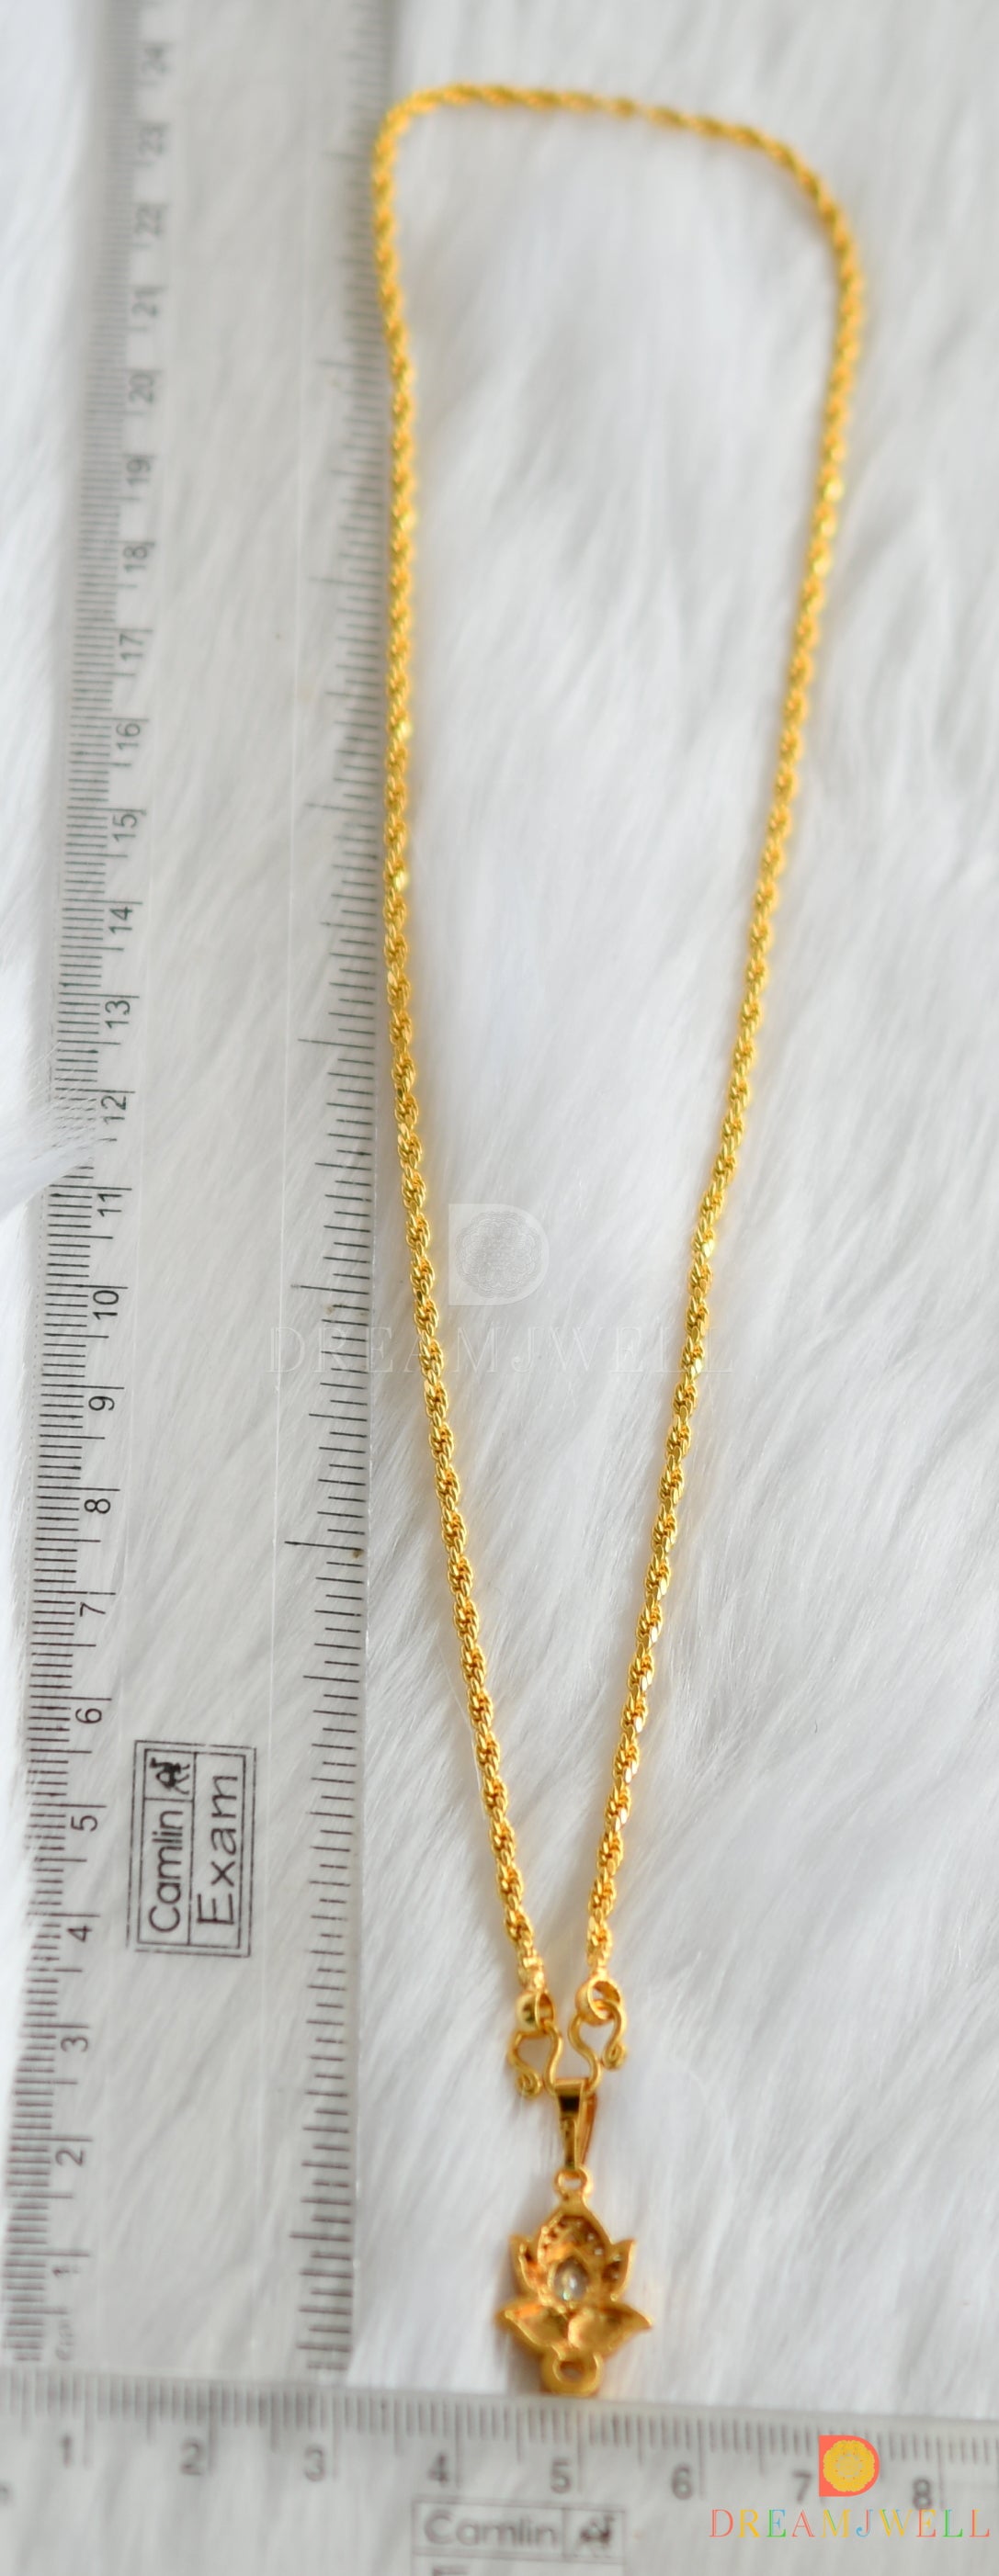 Gold tone white Lotus pendant with chain dj-37303